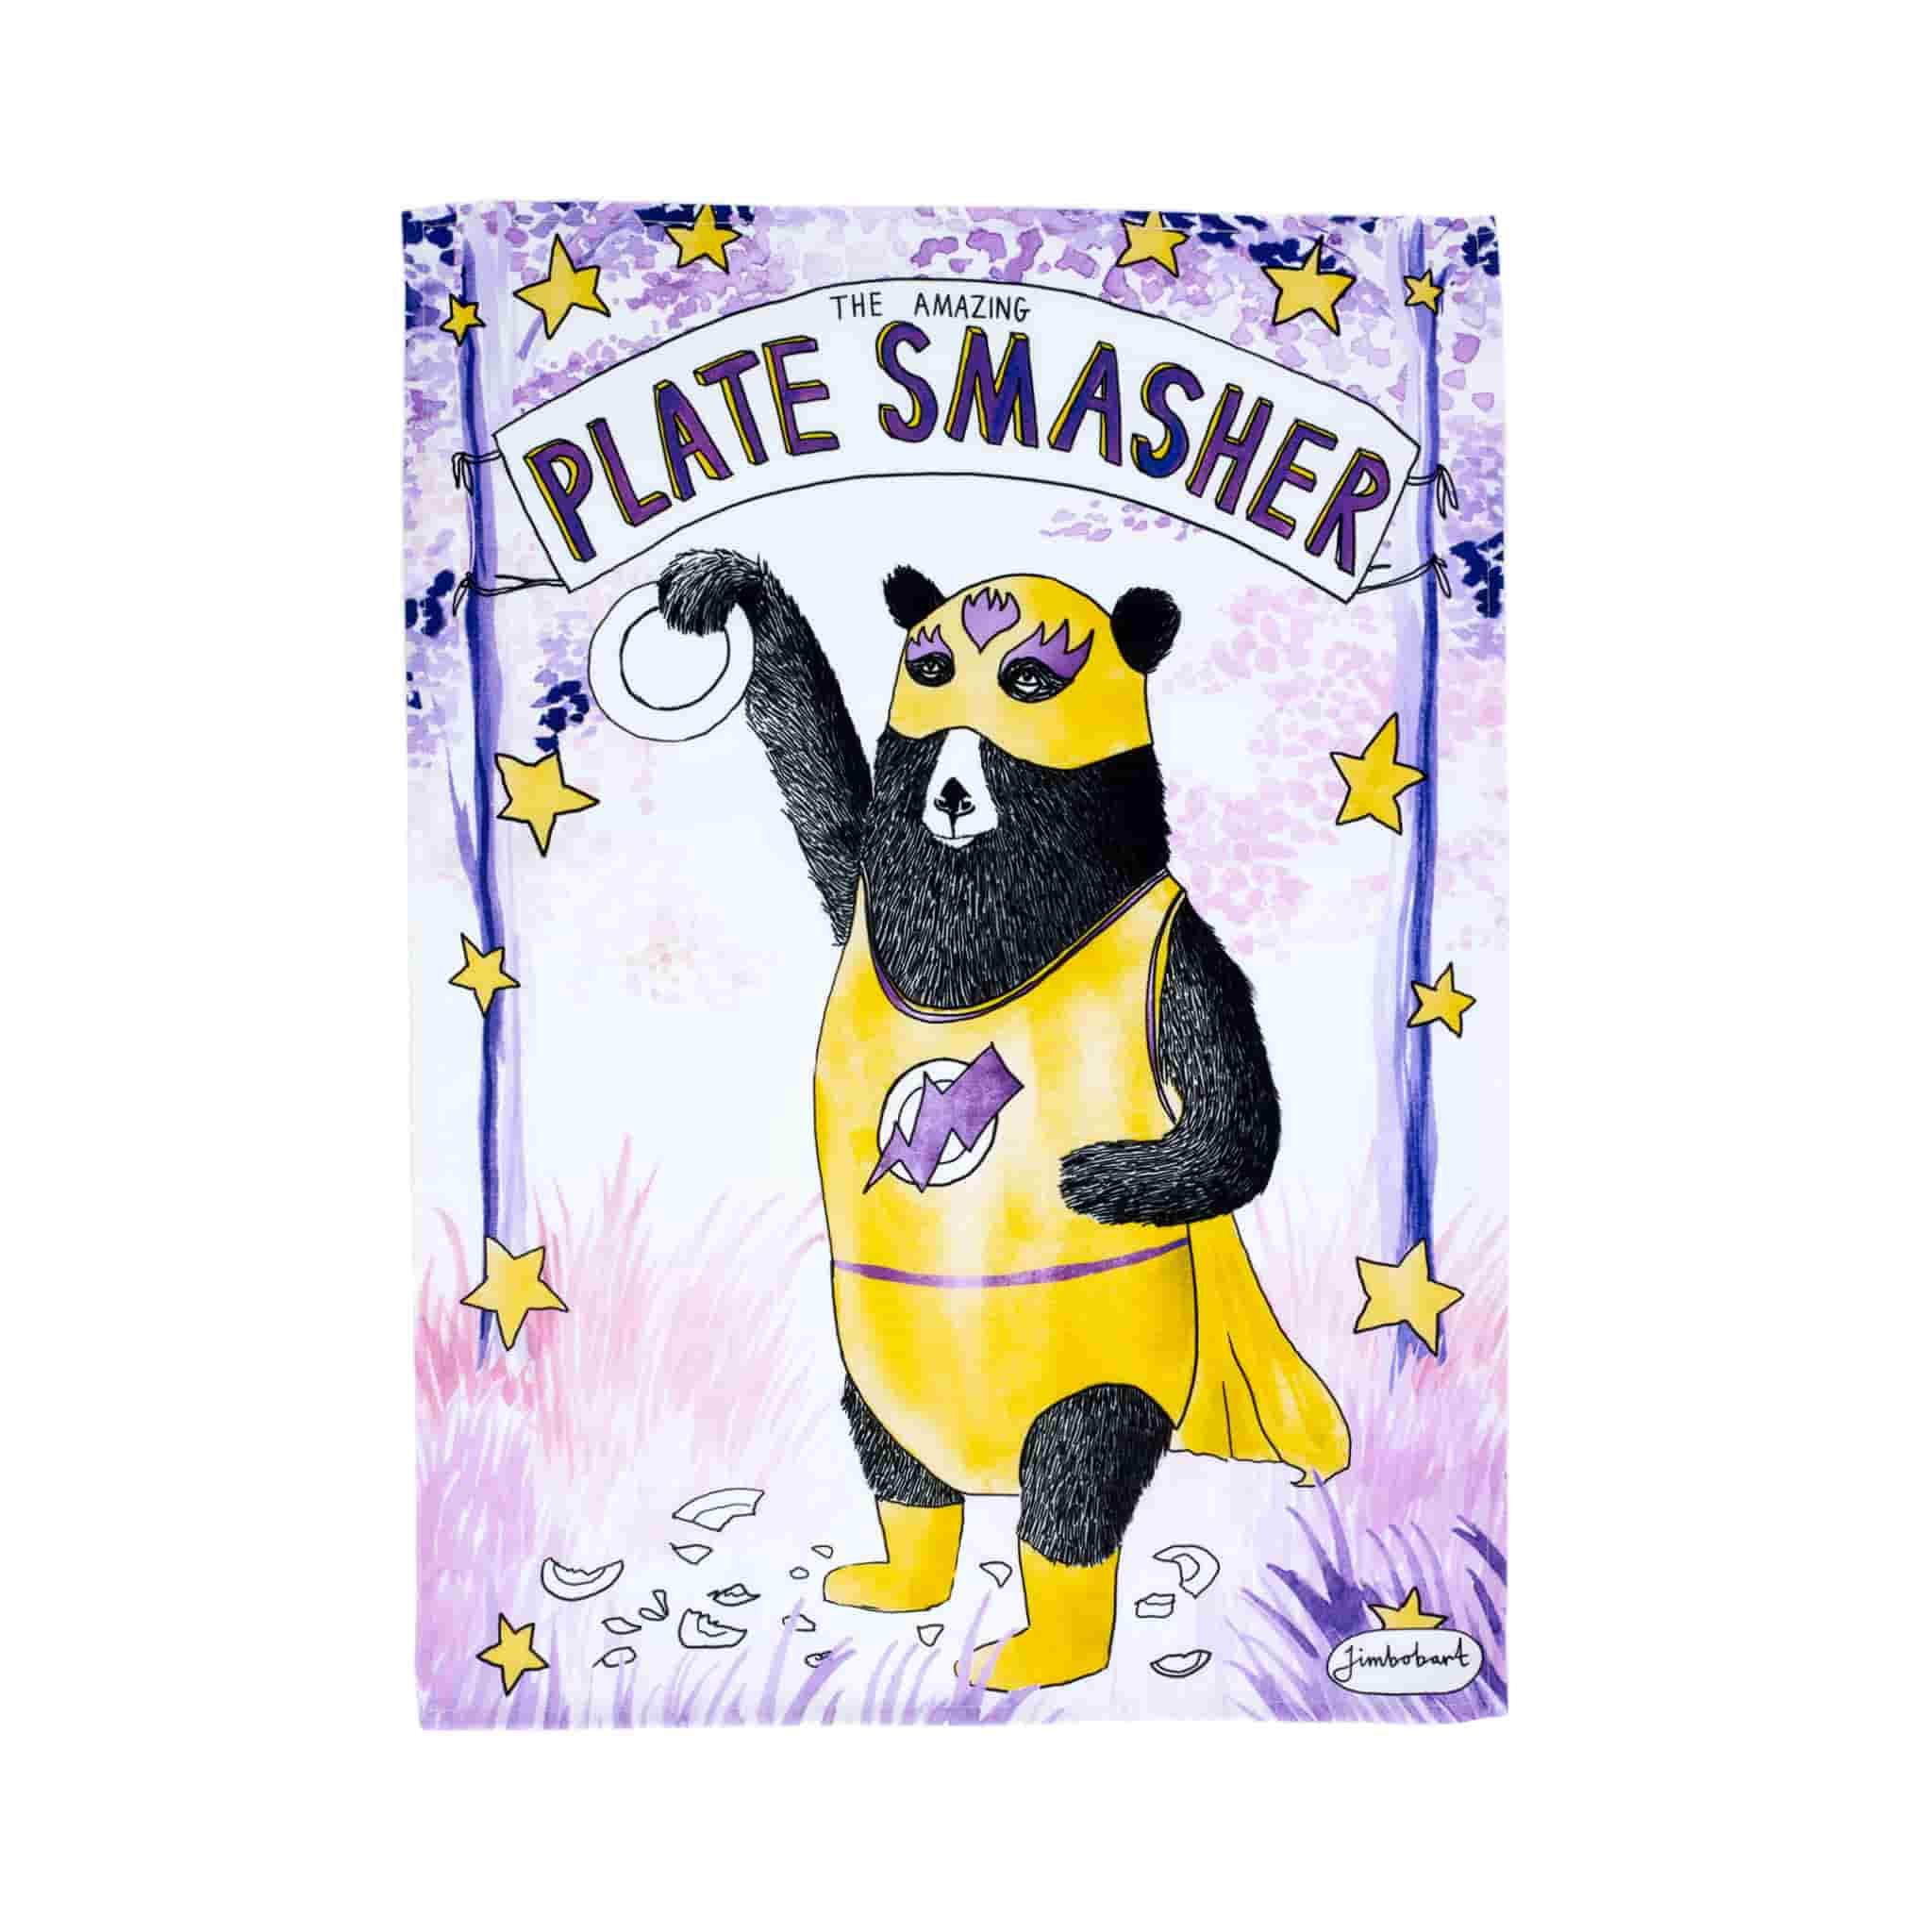 The Amazing Plate Smasher Tea Towel